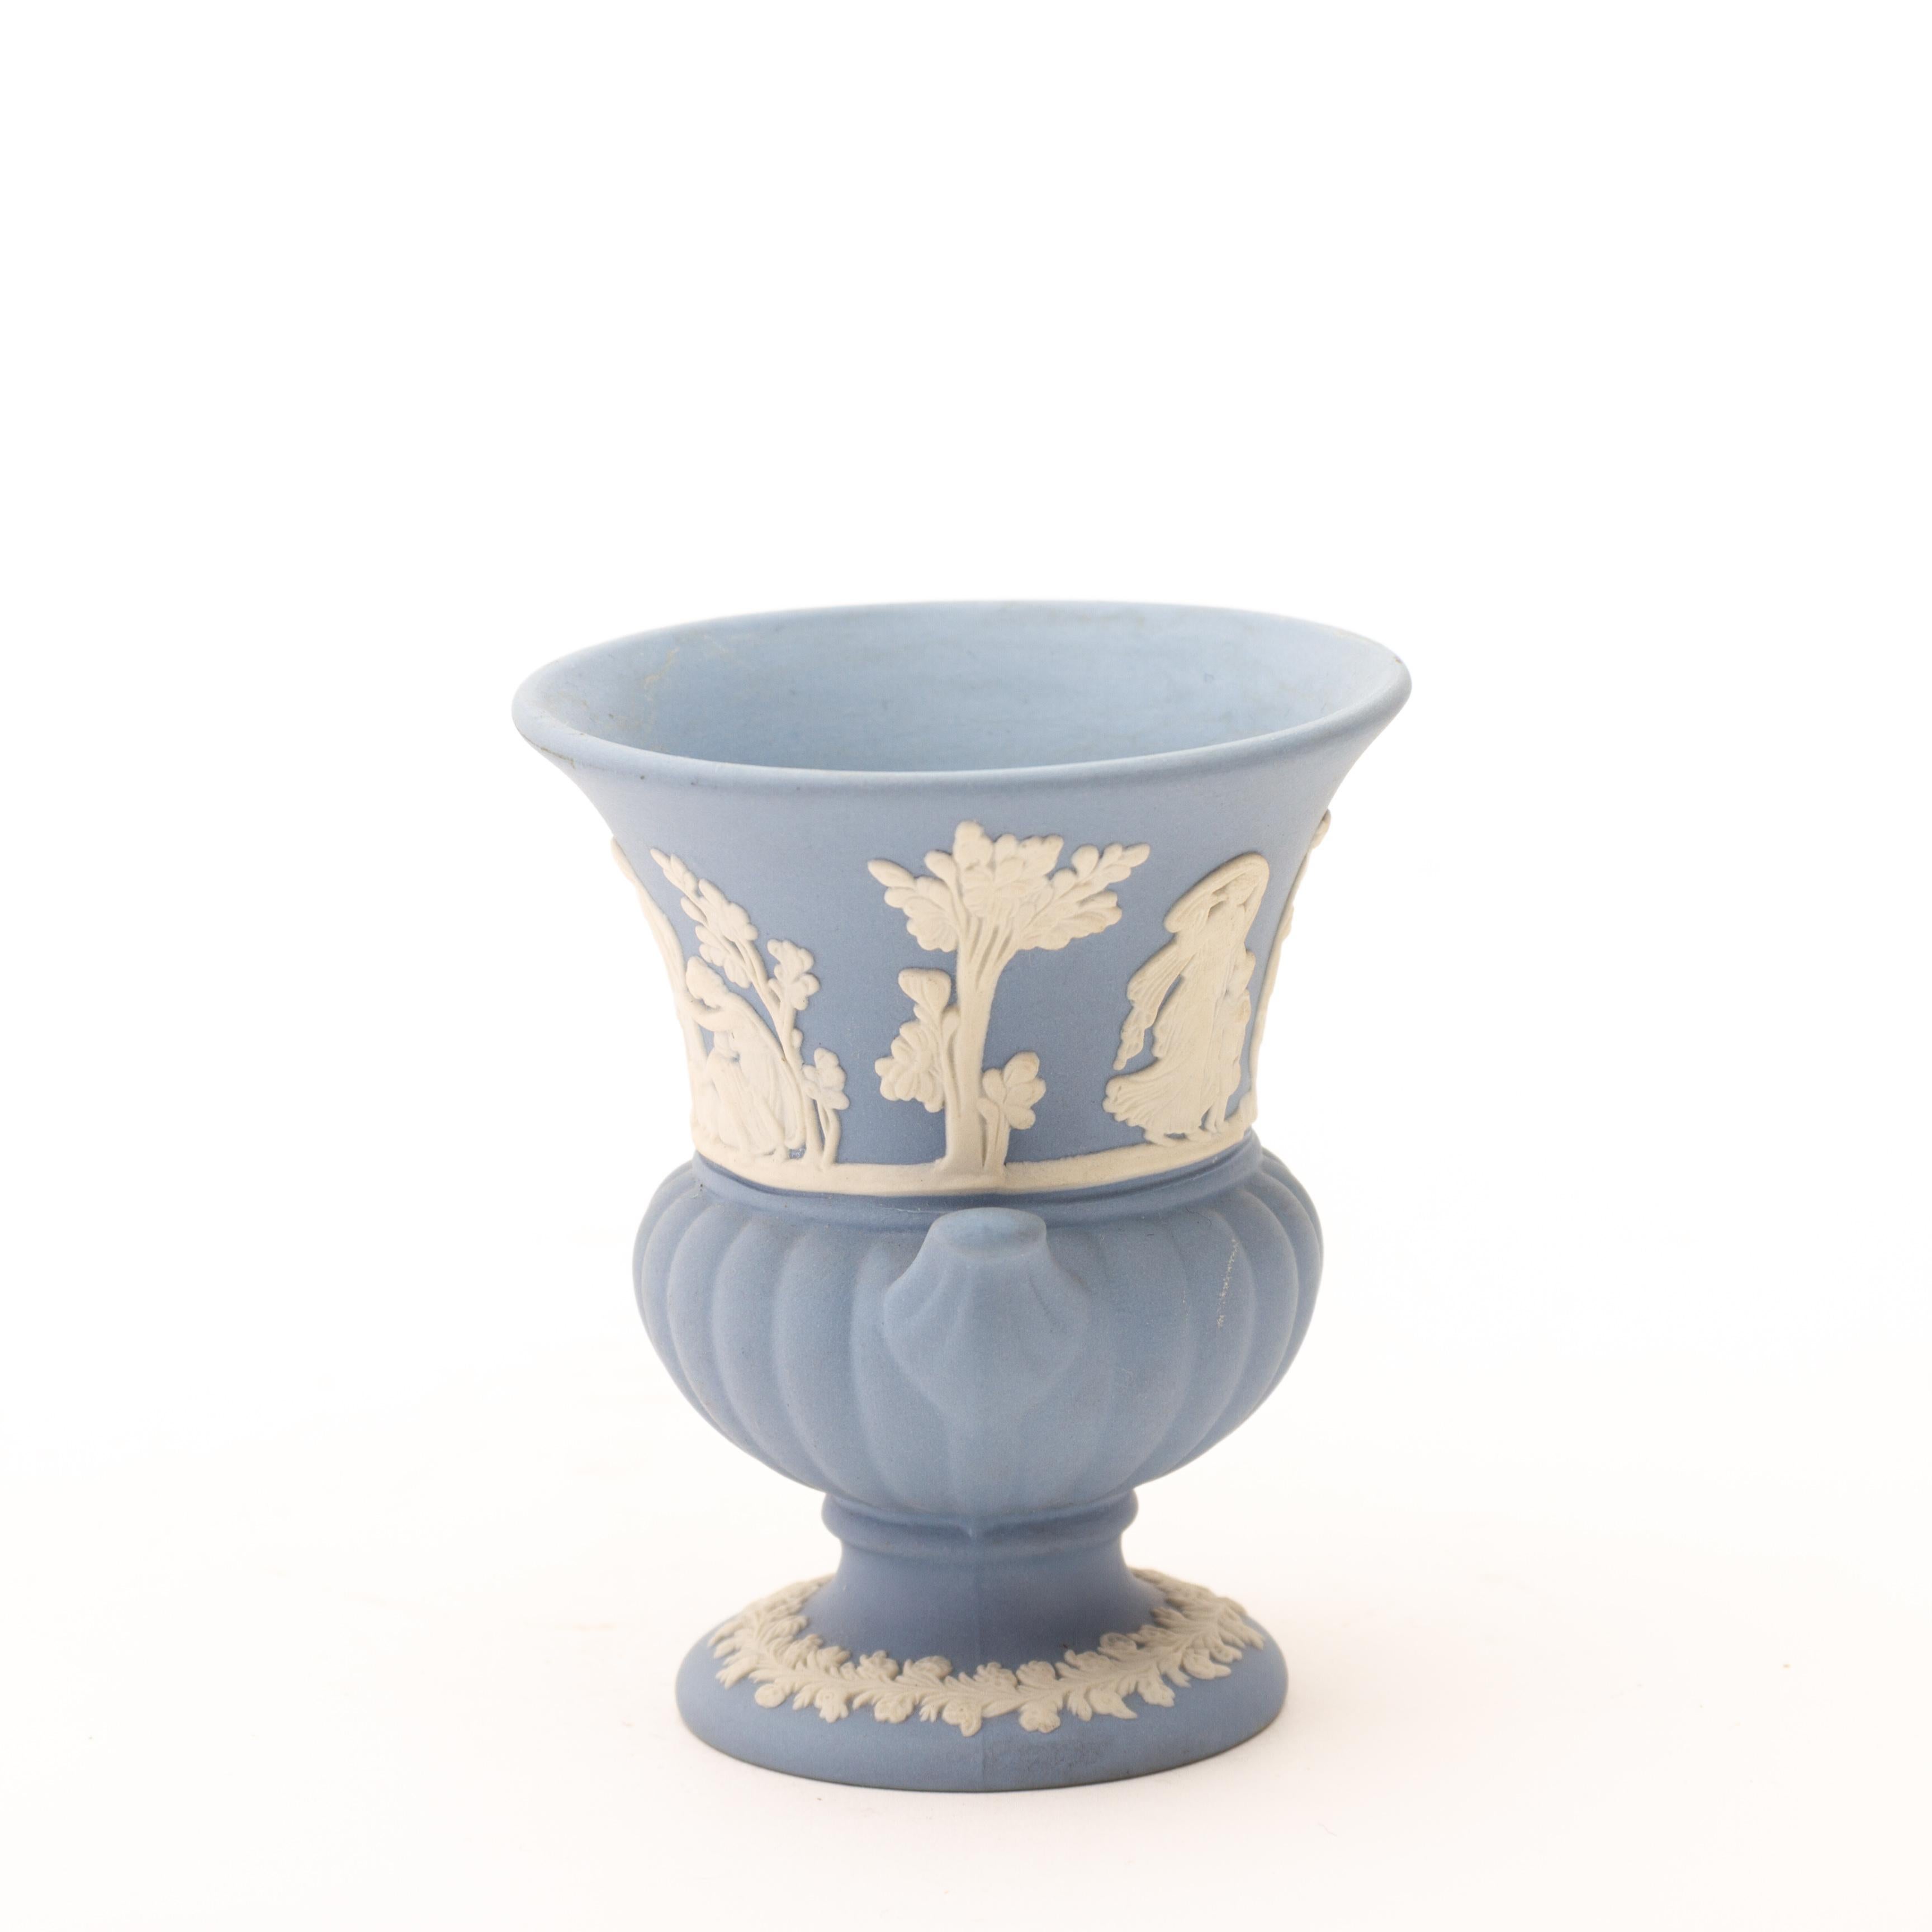 Wedgwood Blue Jasperware Neoclassical Cameo Urn Vase
Good condition
Free international shipping.